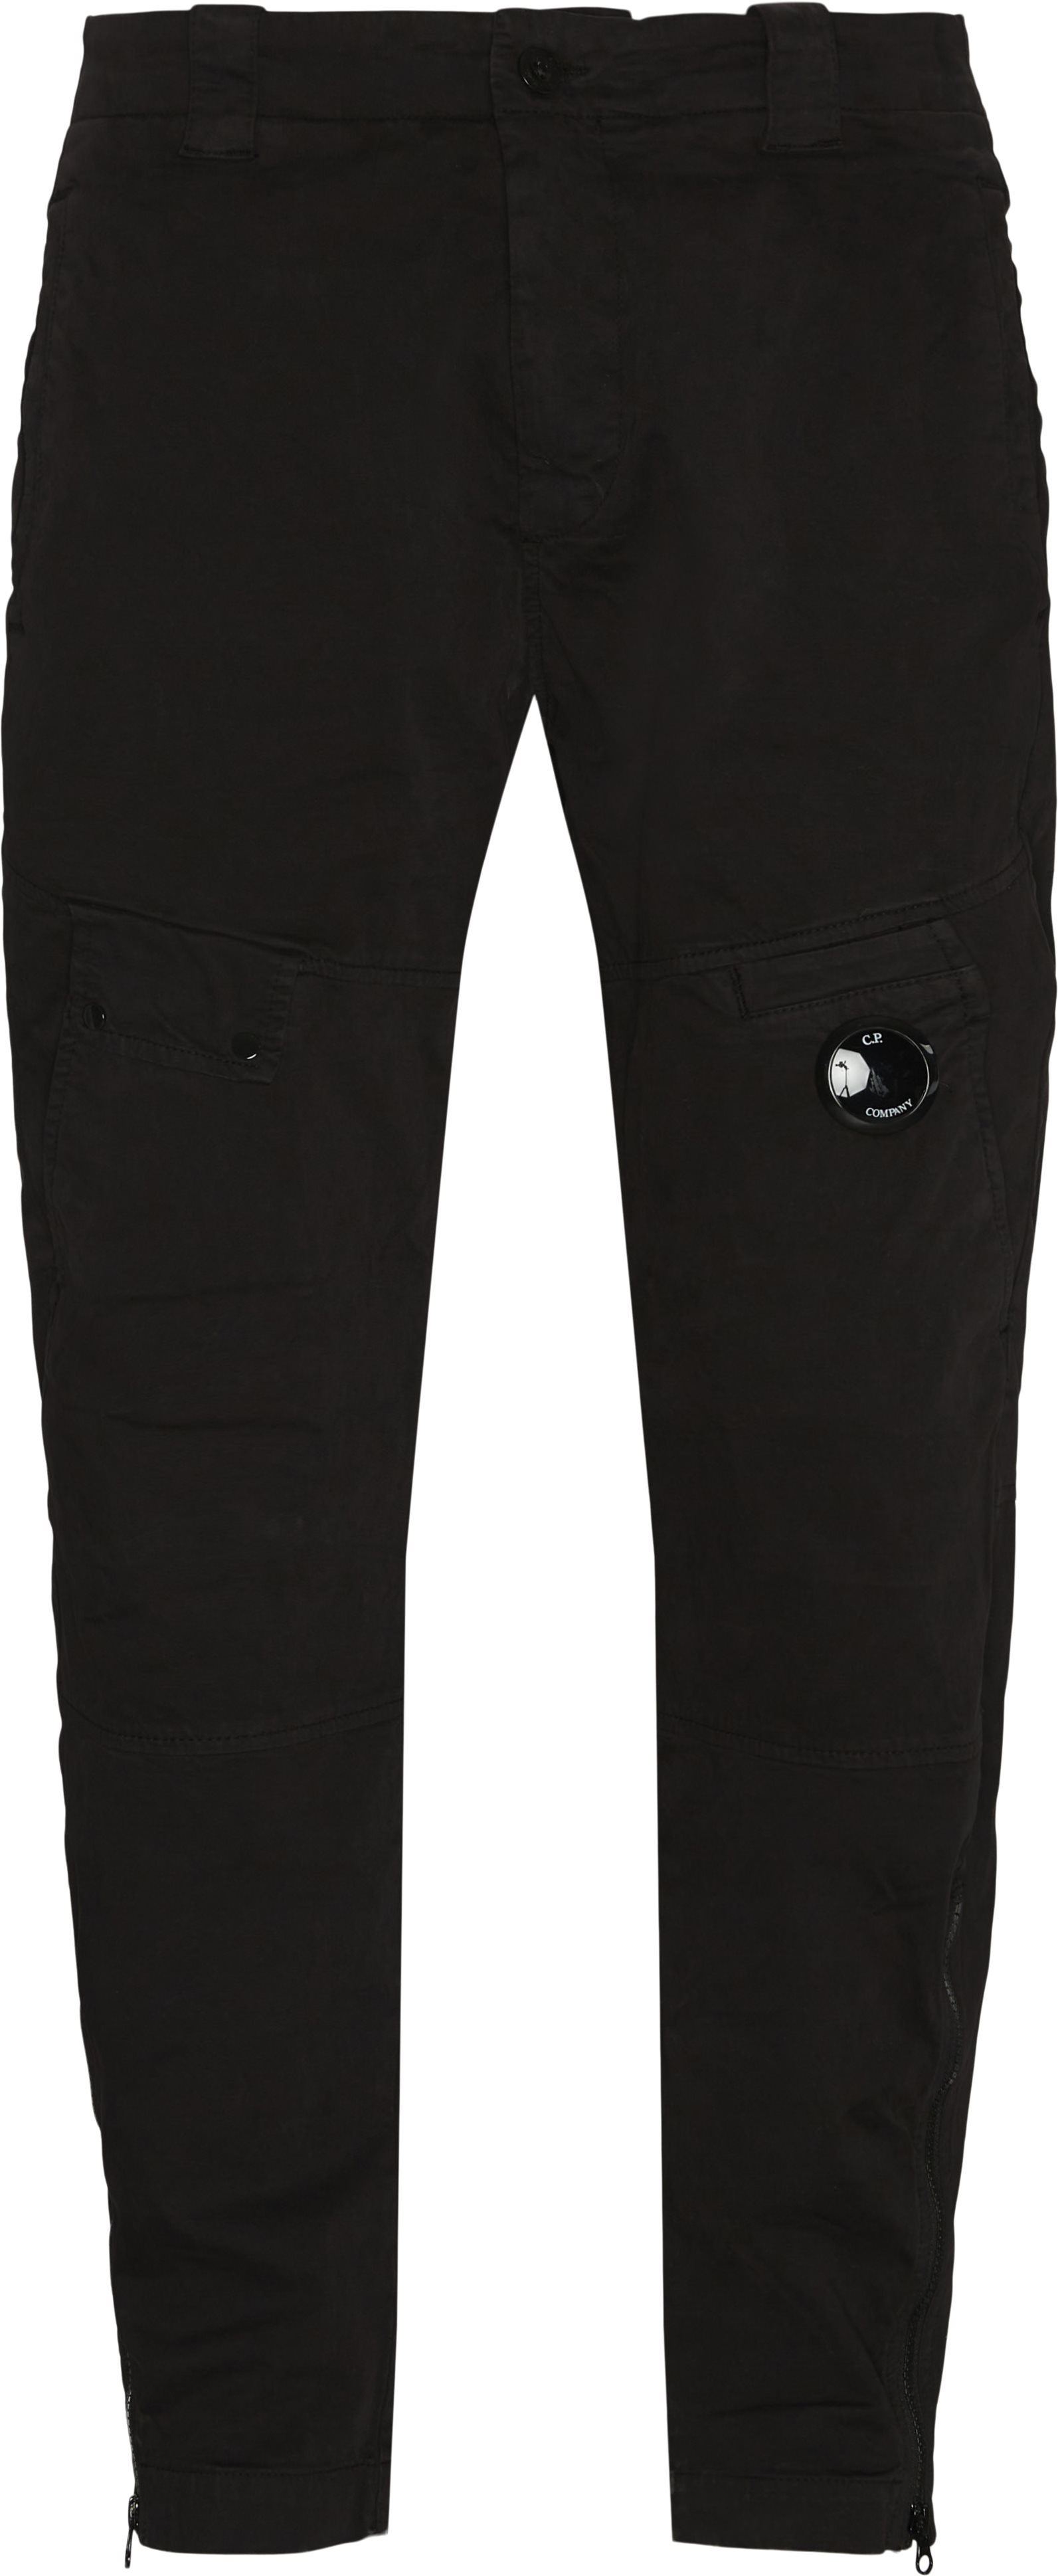 Garment Dyed Pants - Trousers - Regular fit - Black